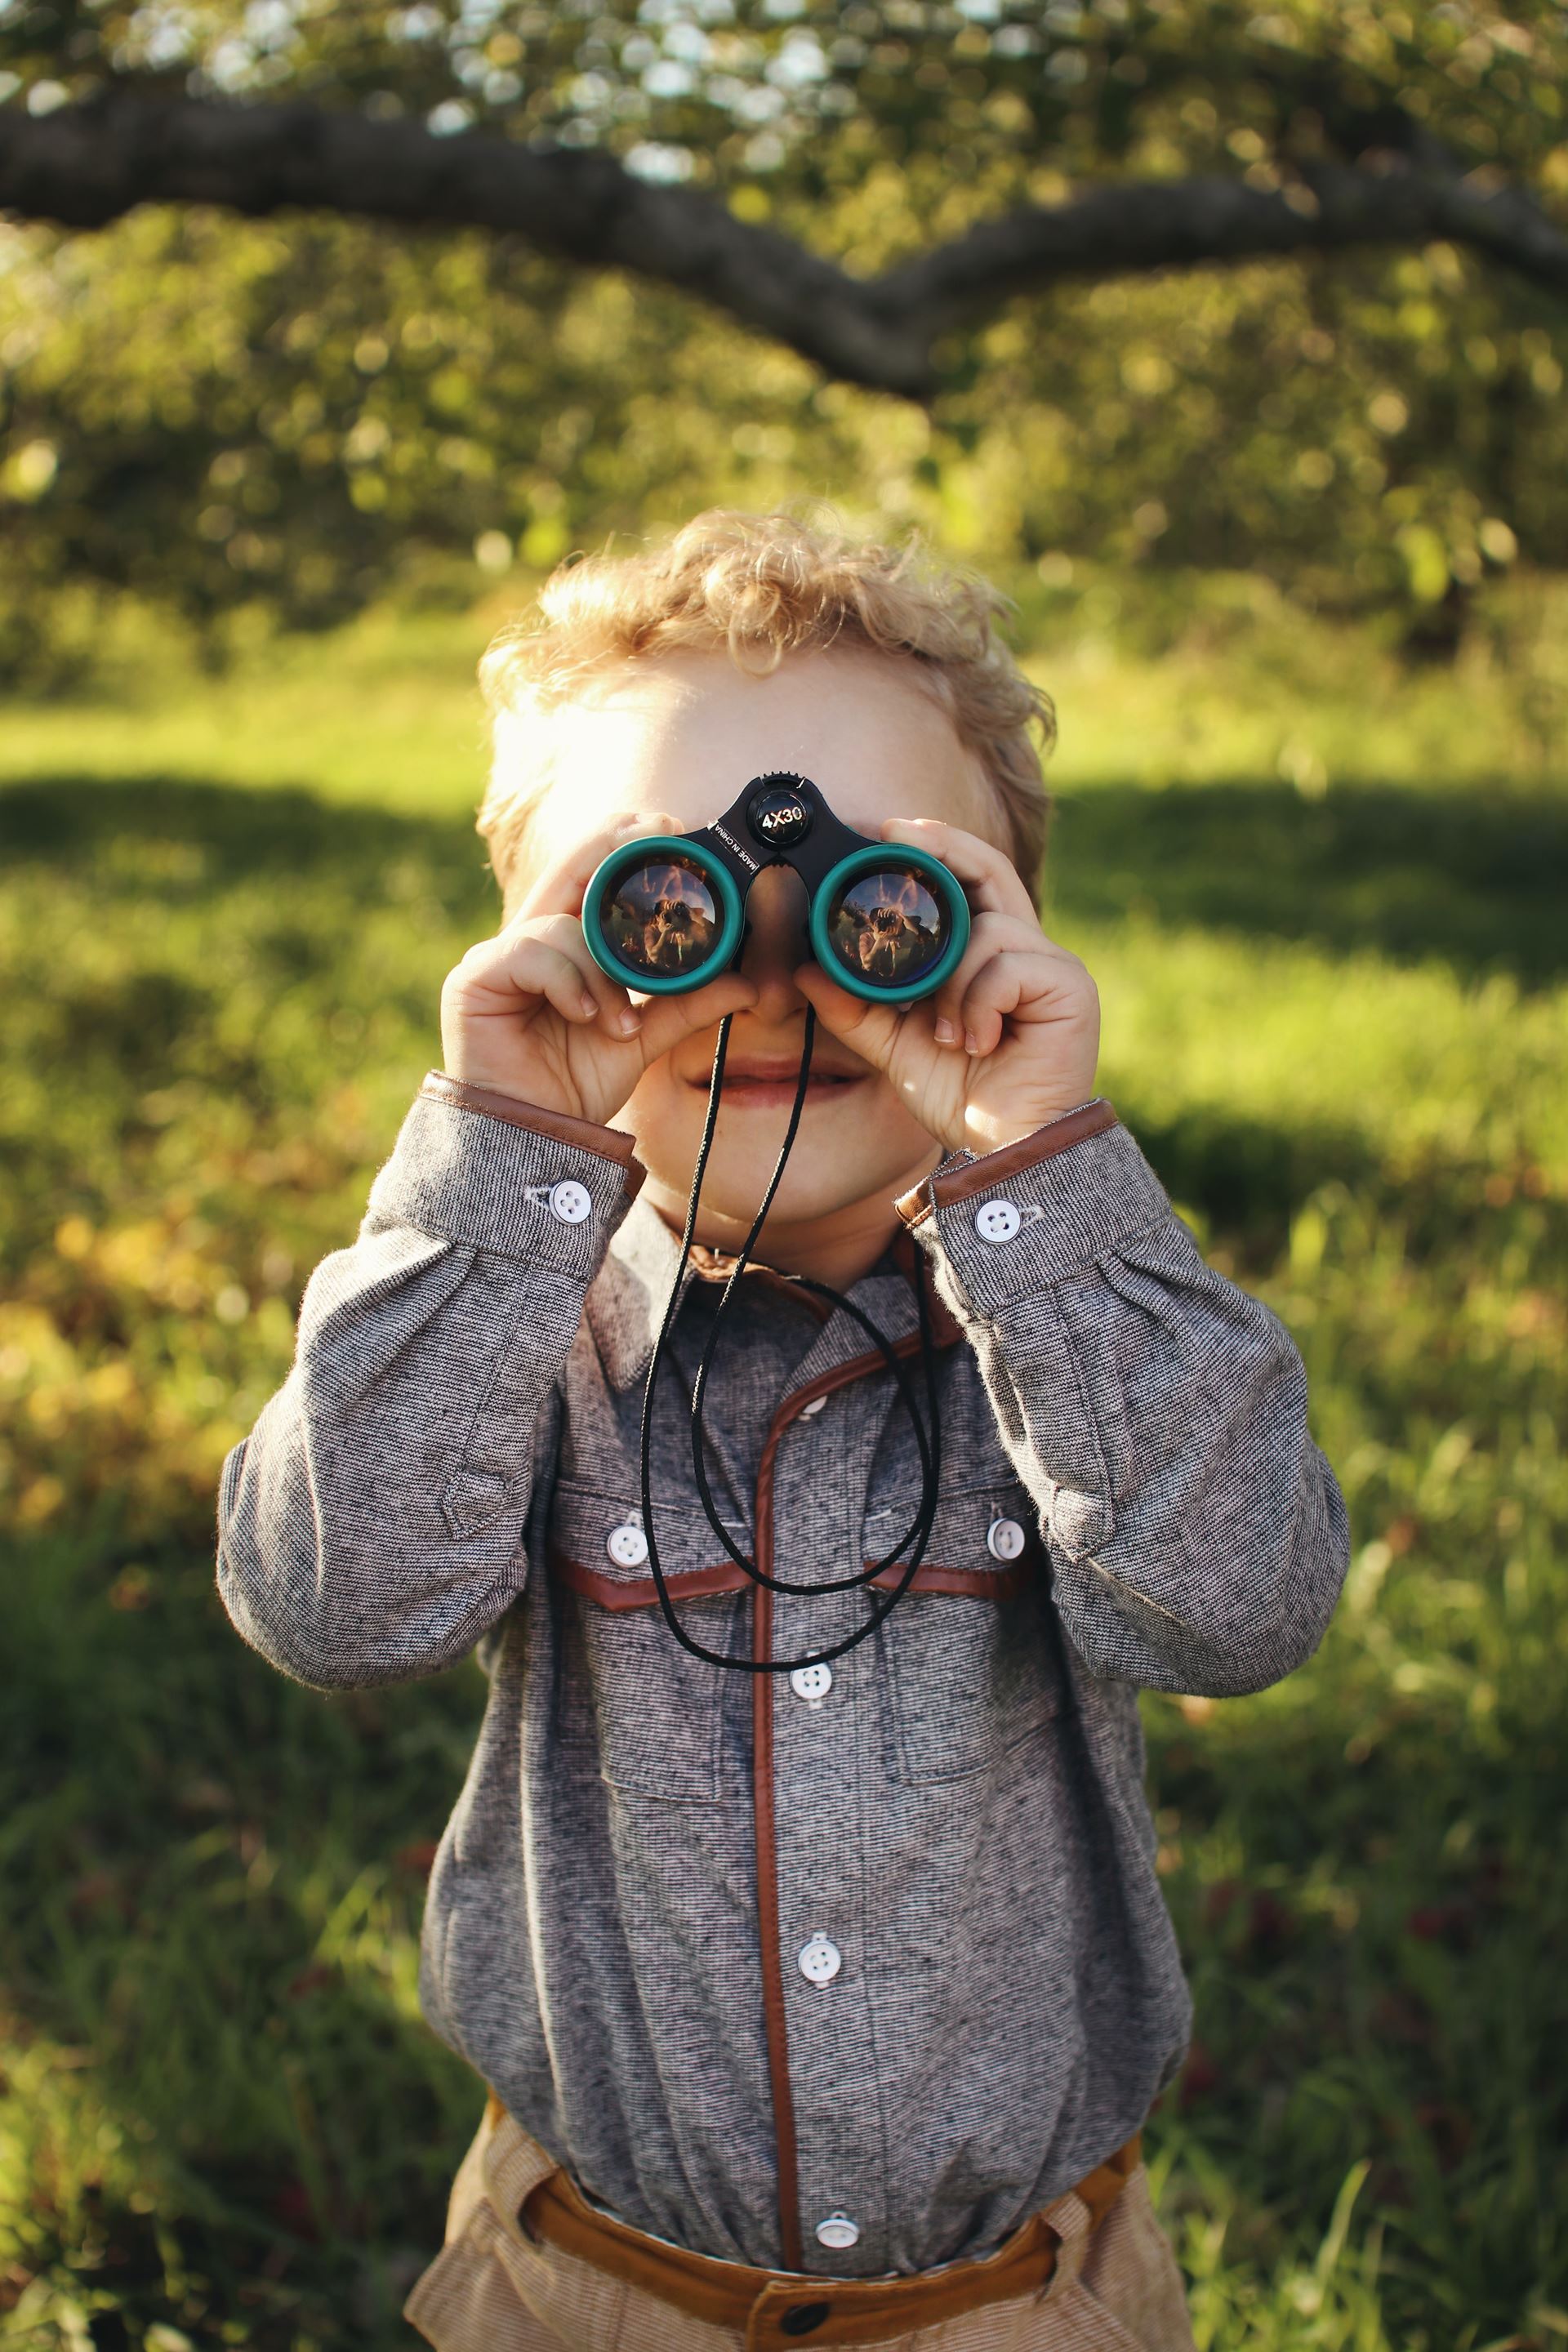 I child looking through binoculars